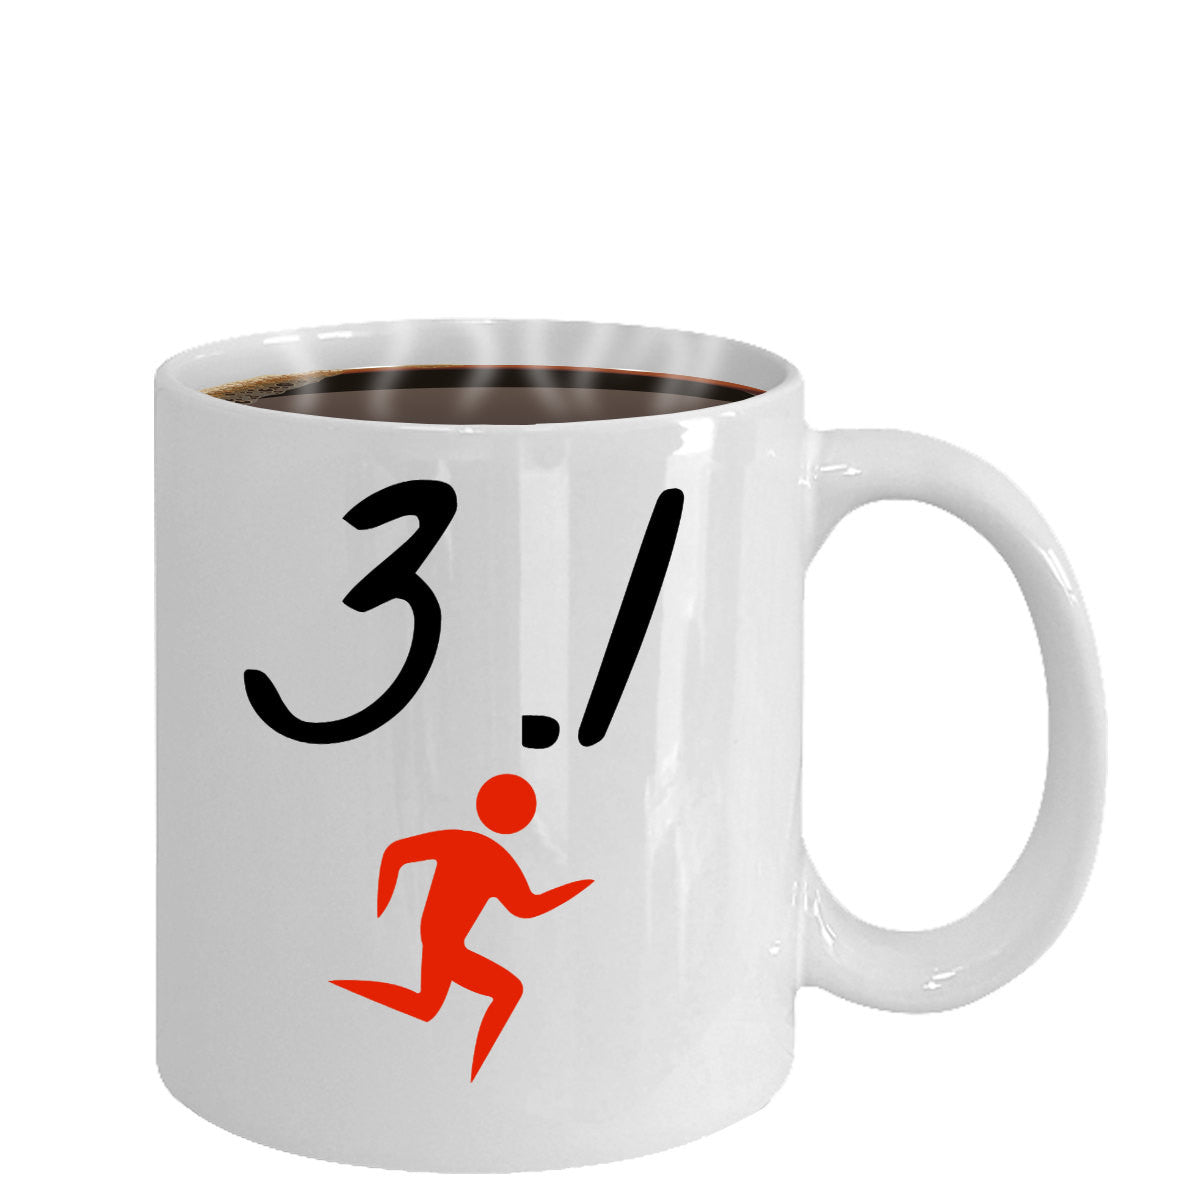 3.1 5K Runners Marathon Custom Coffee Mug